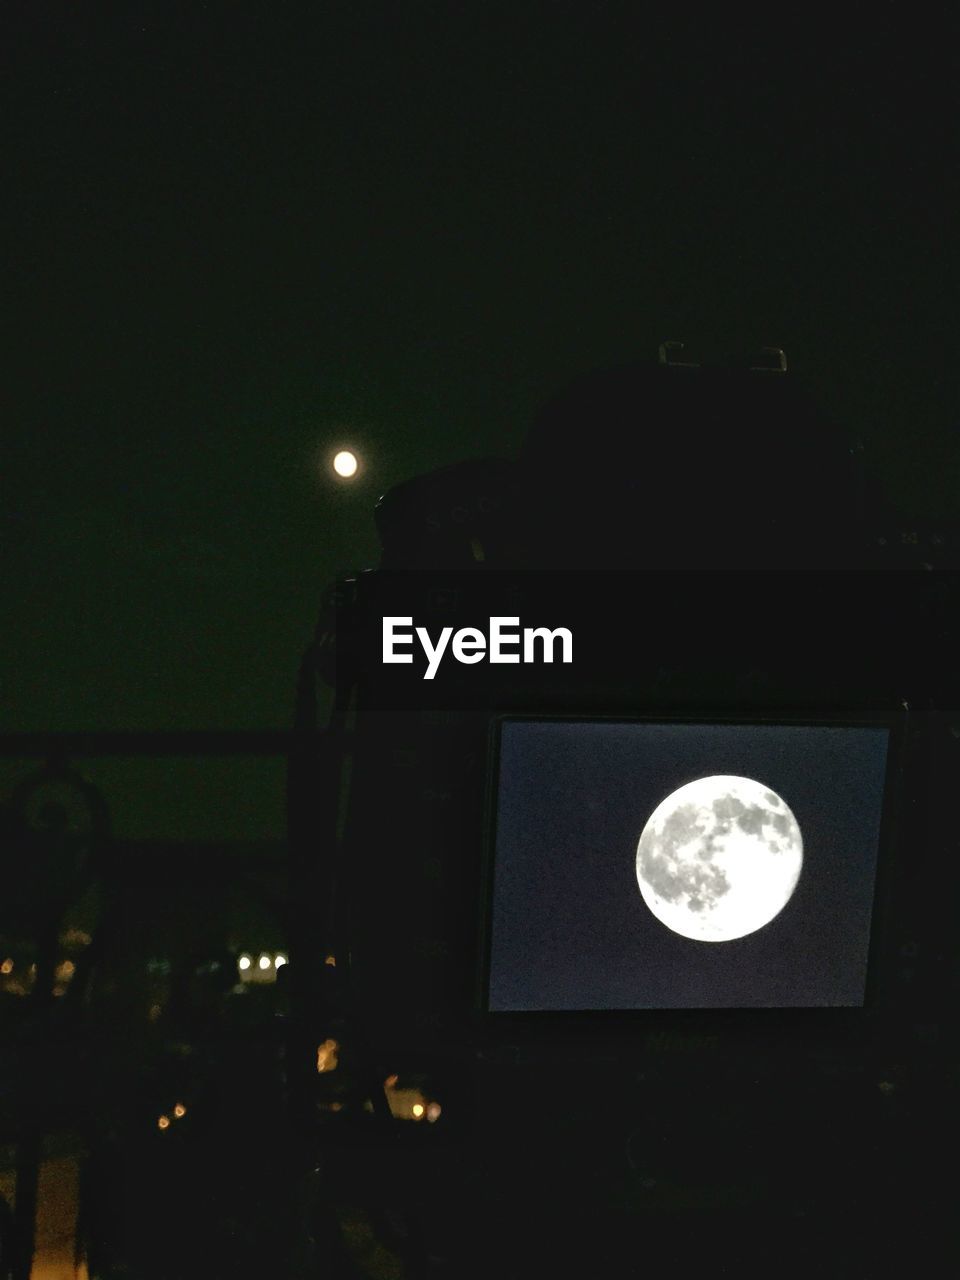 Moon on digital display